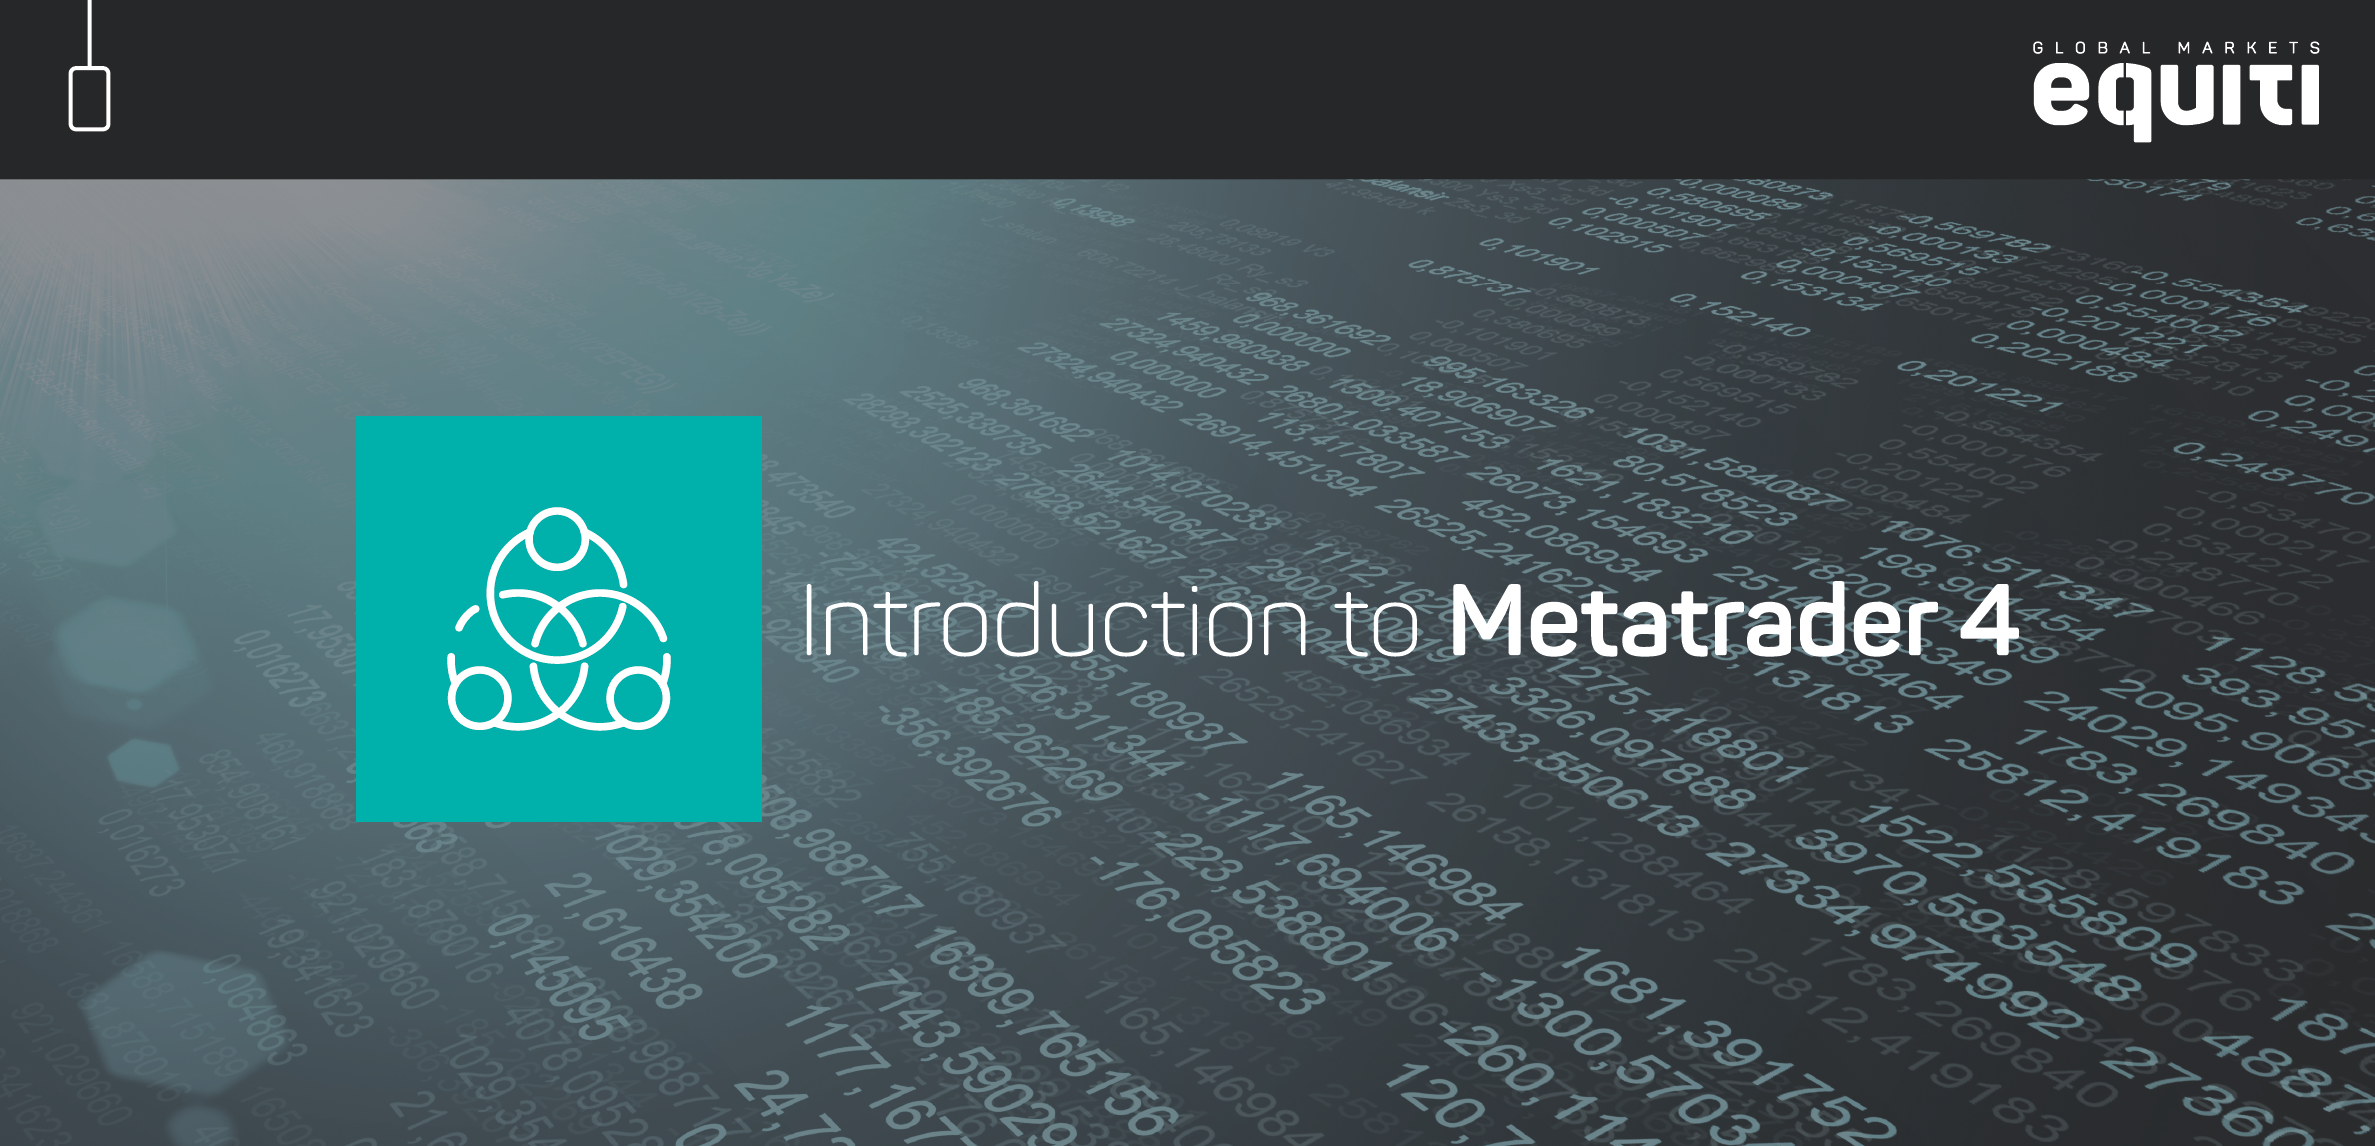 Introduction to MetaTrader 4 Forex Trading Platform